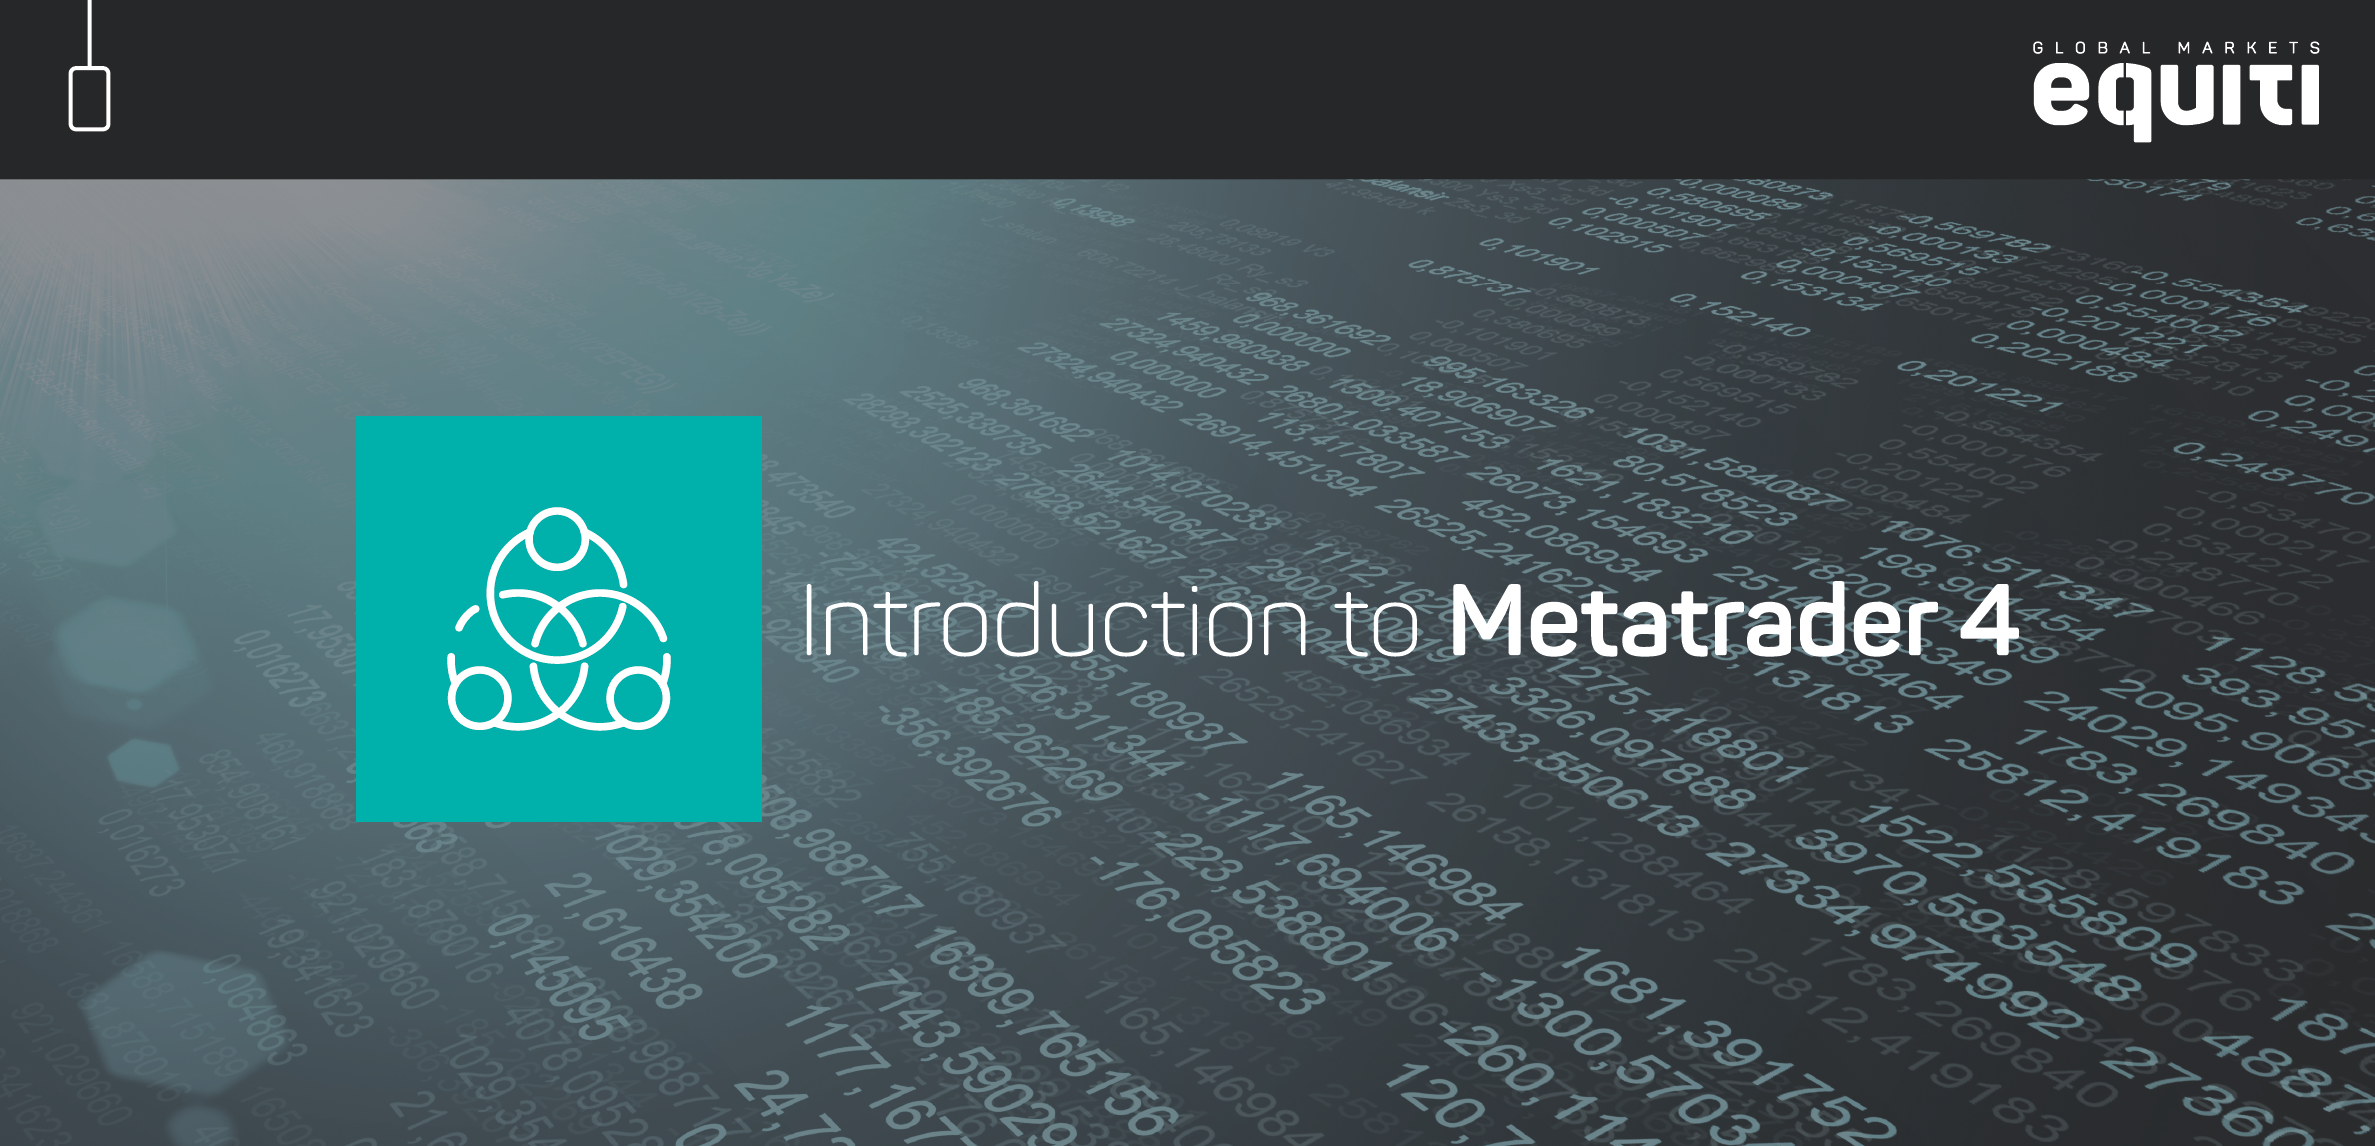 Introduction to MetaTrader 4 Forex Trading Platform